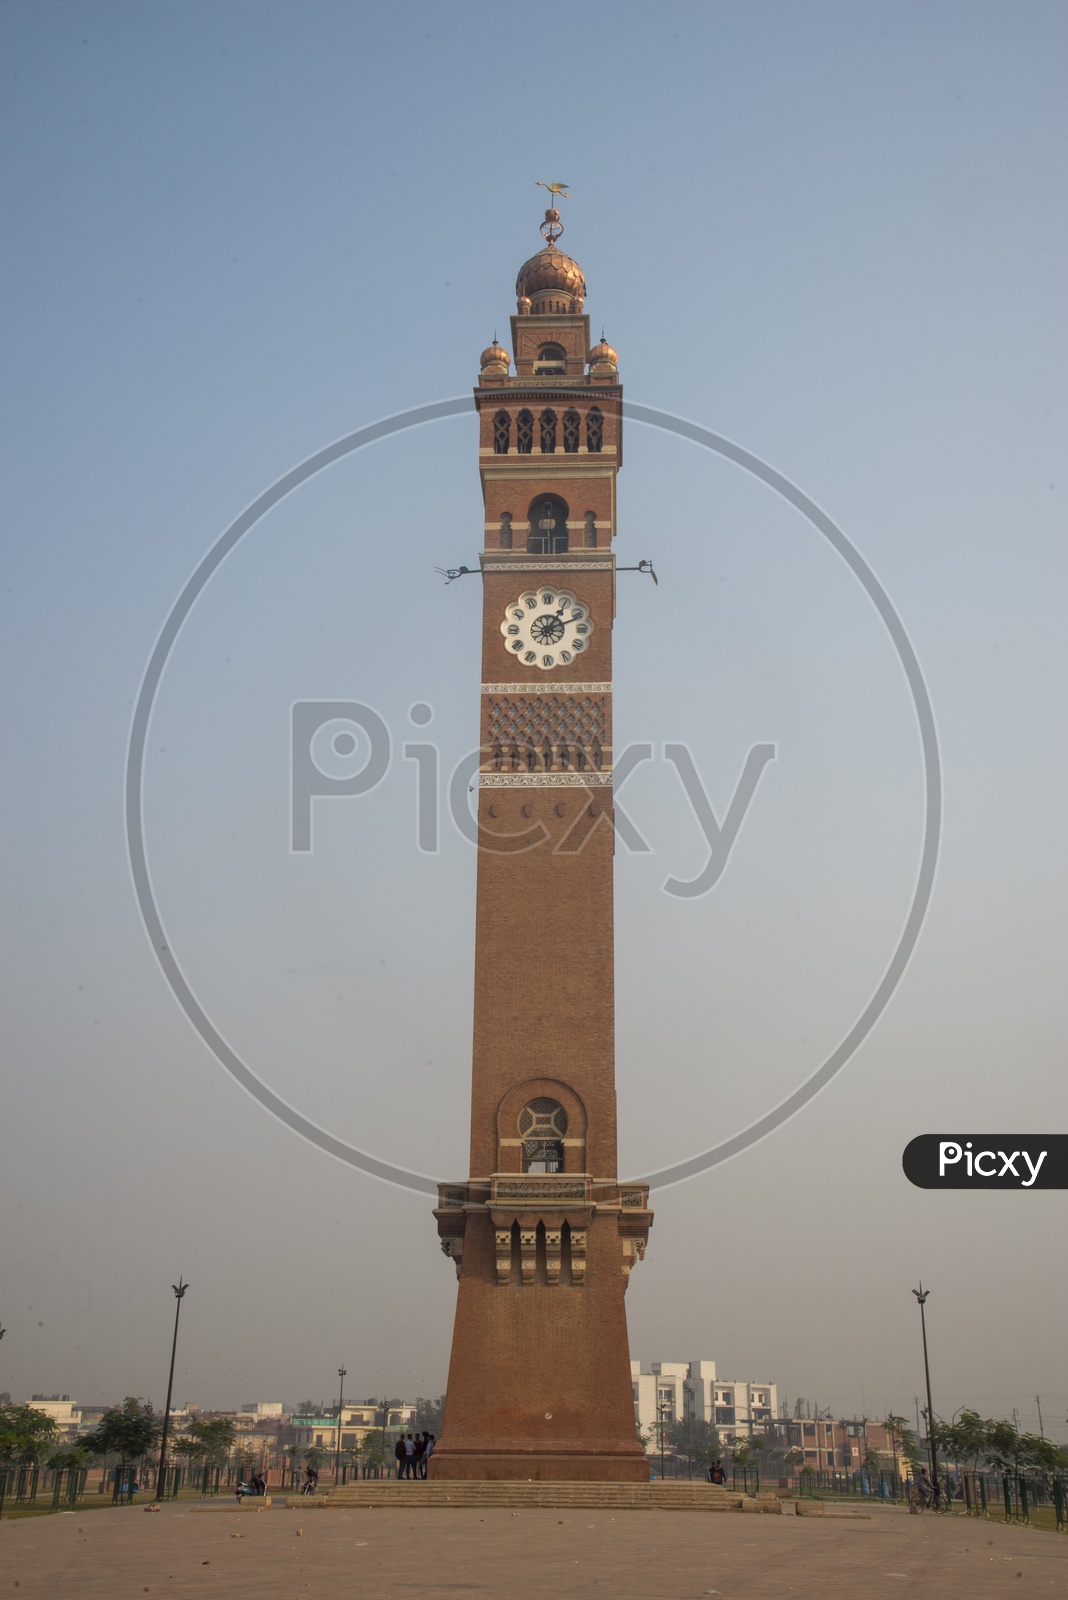 Husainabad Clock Tower located near Rumi Darwaza